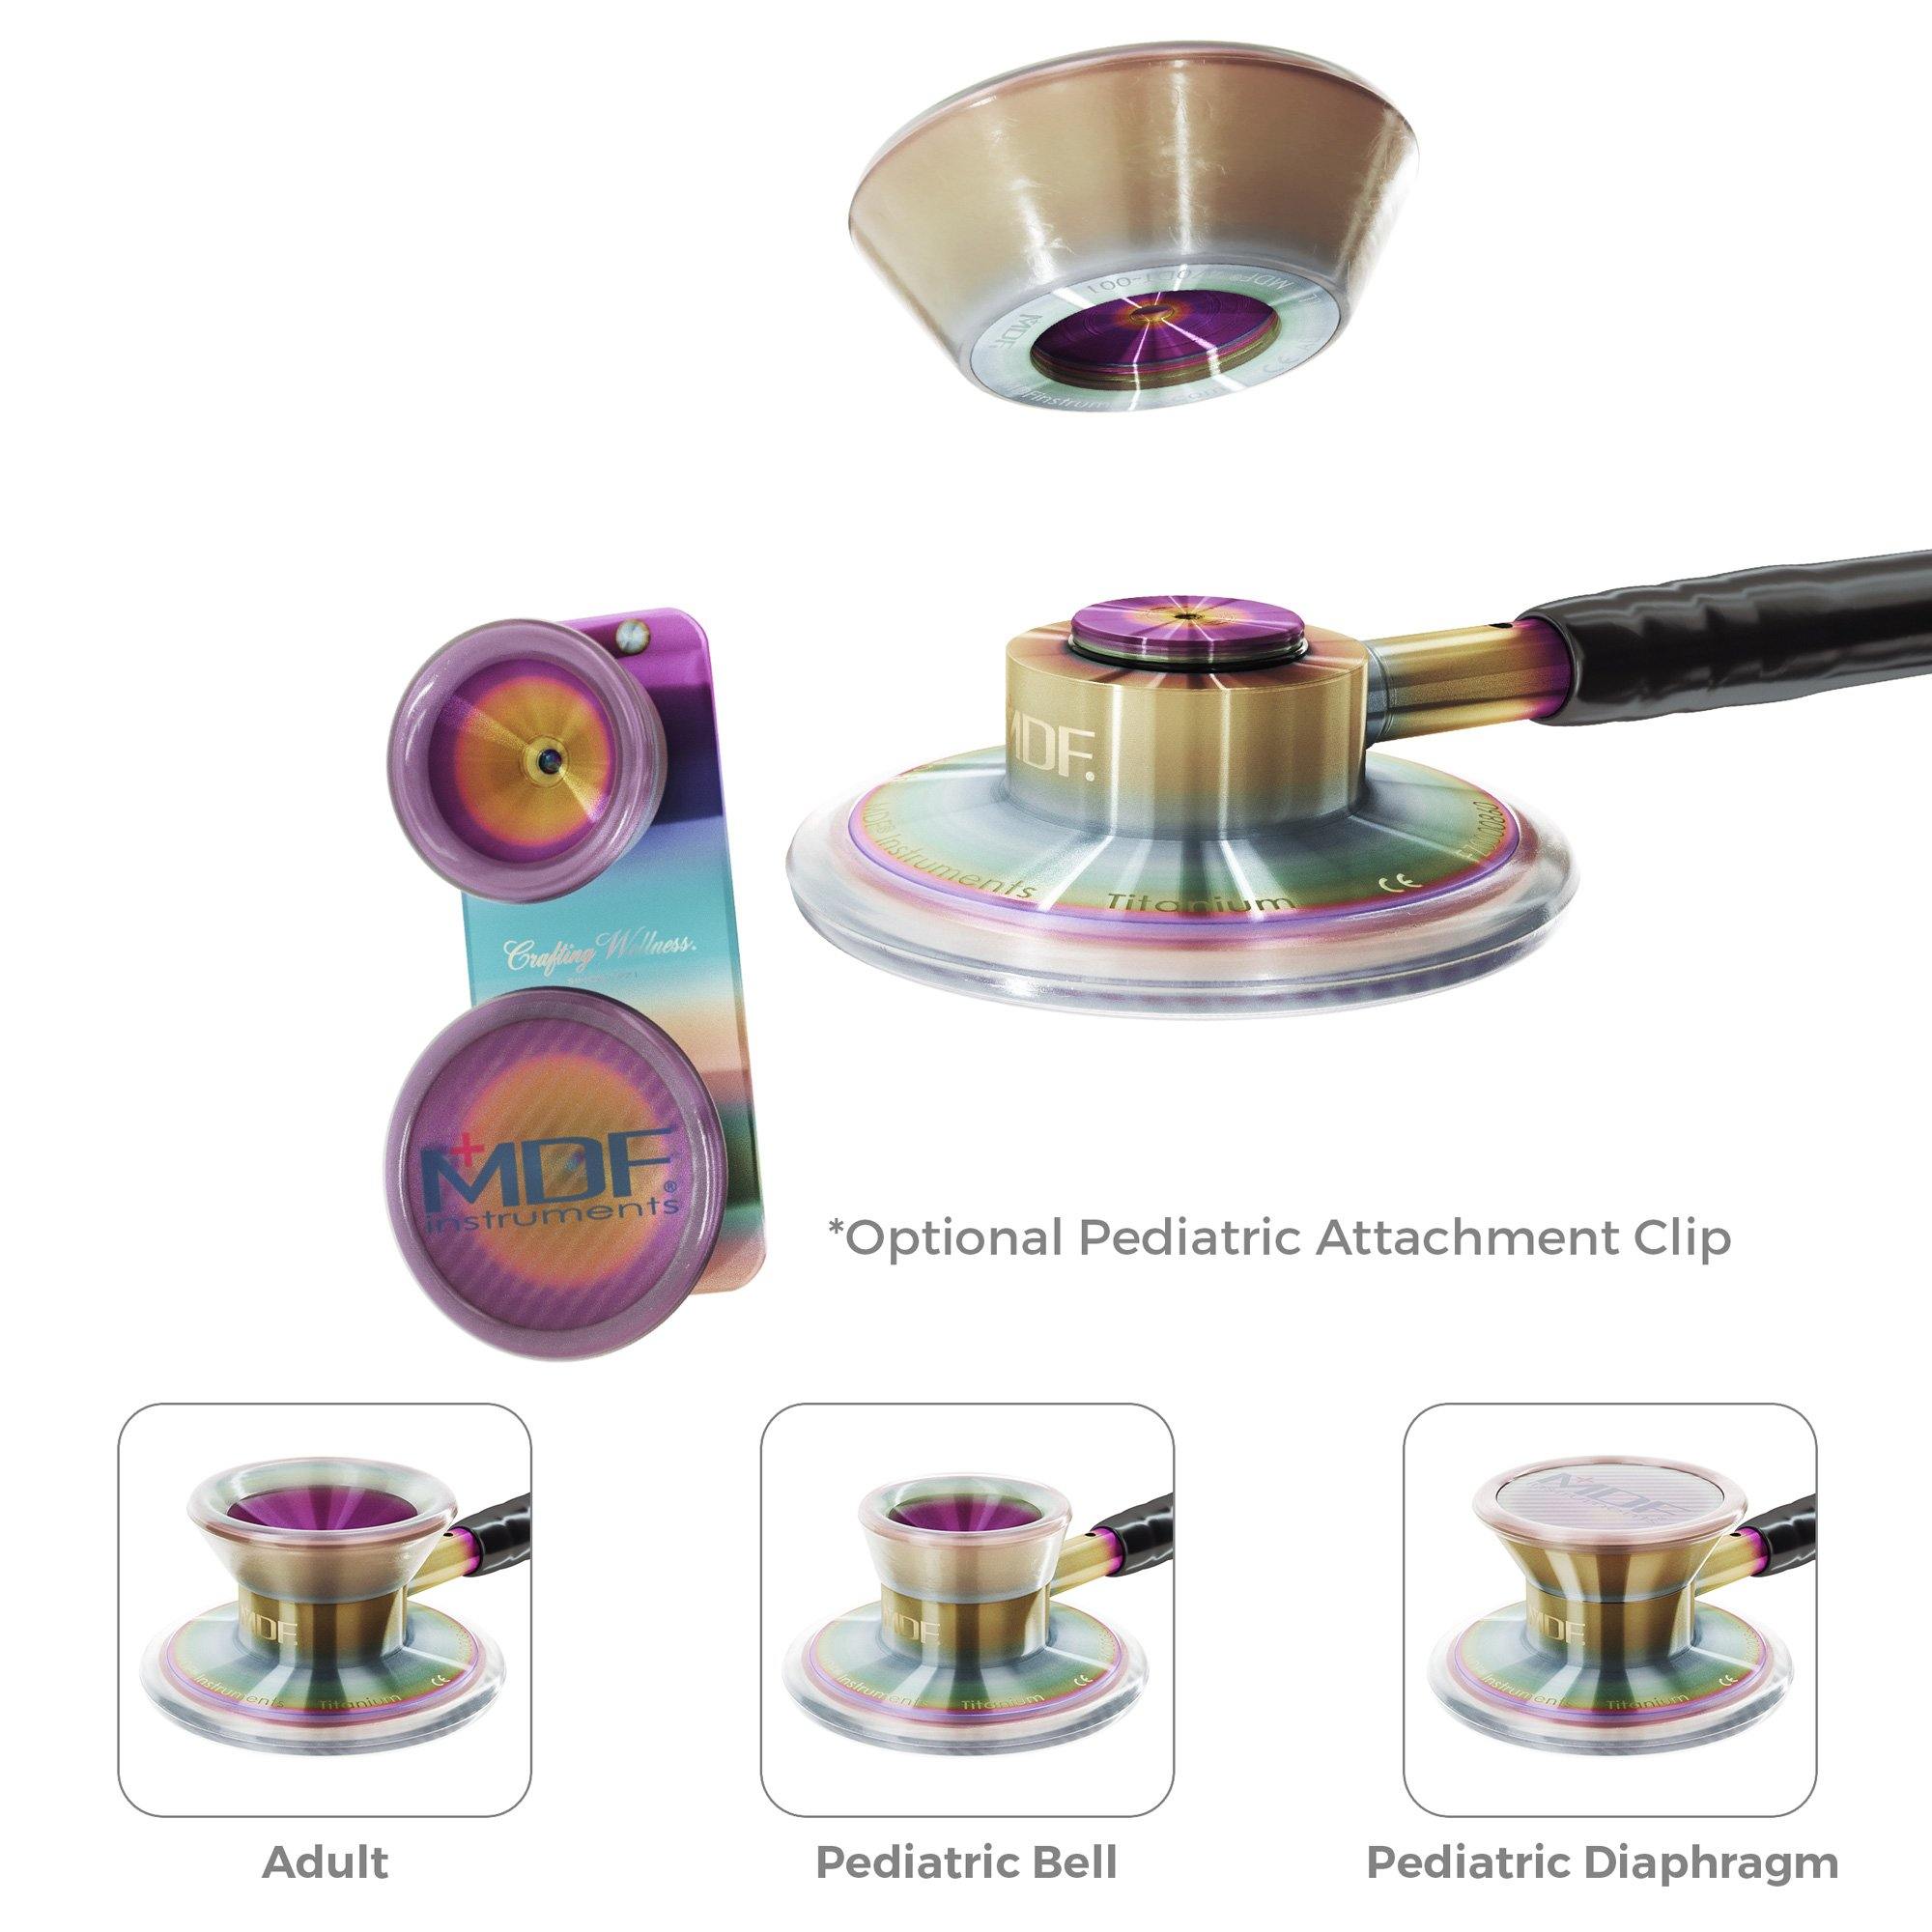 Stethoscope MDF Instruments MD One Epoch Titanium NoirNoir Black and Kaleidoscope Attachment Clip for Pediatric Patients